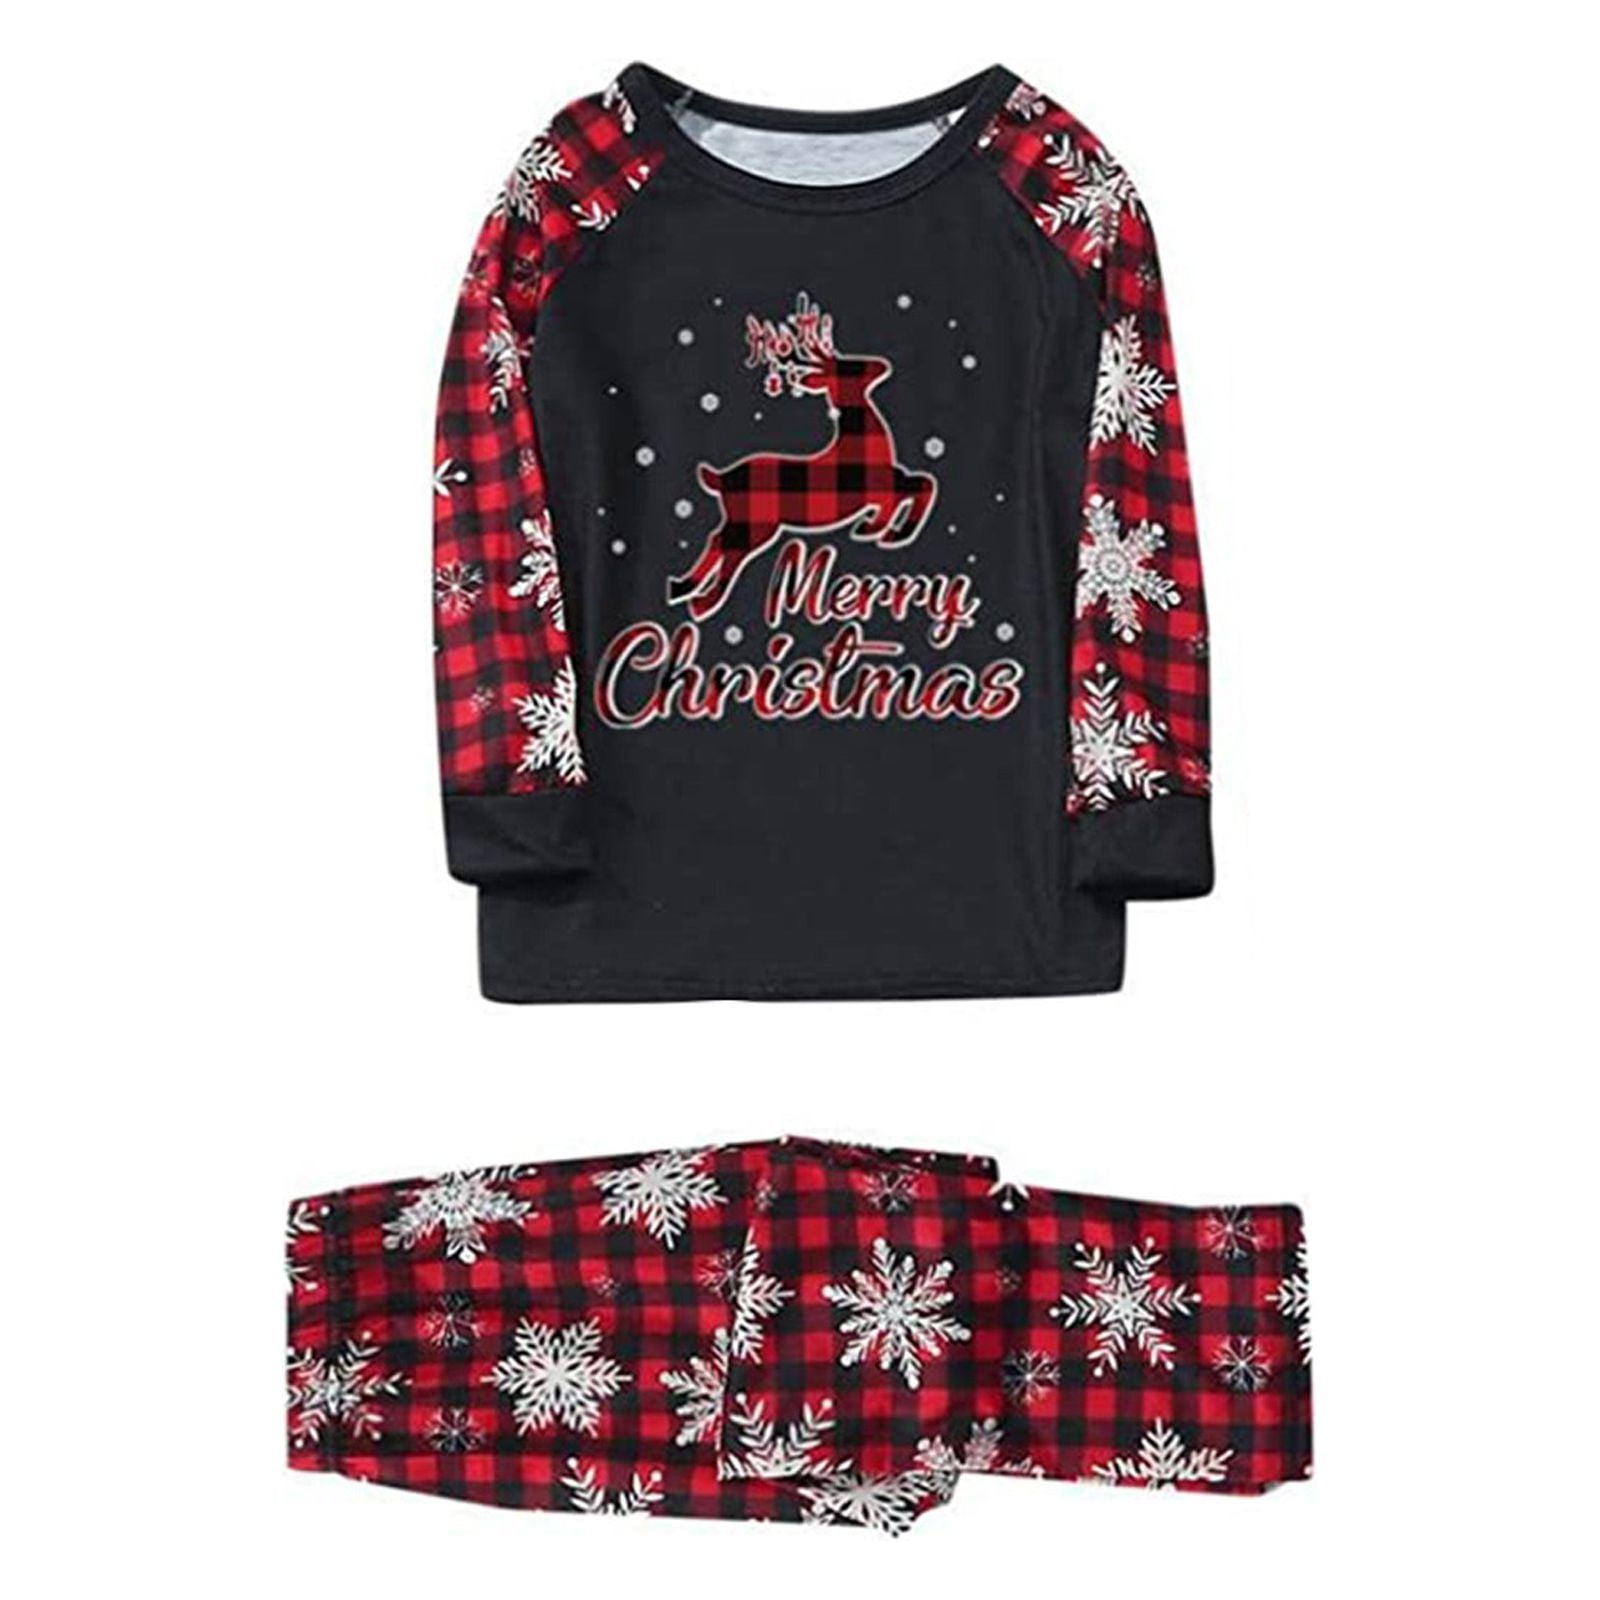 Puntoco Men'S Clearance Sleepwear Sets Christmas Pajamas Set for Family ...